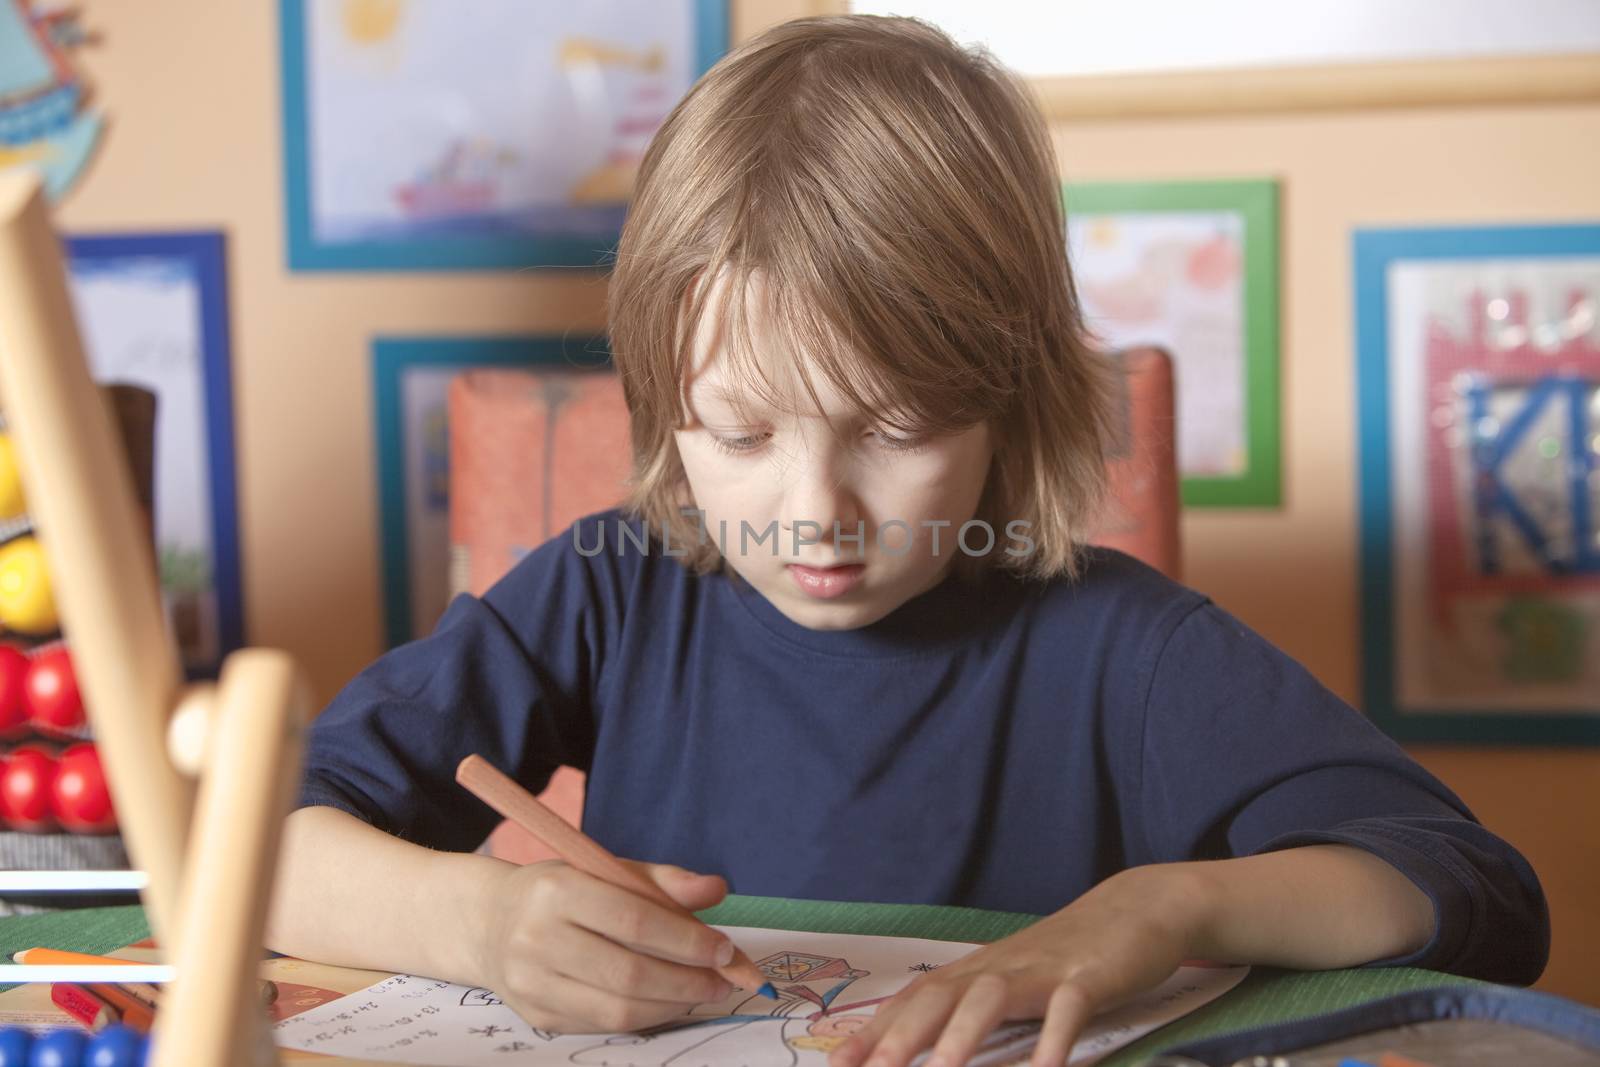 Boy Working on his Homework by courtyardpix